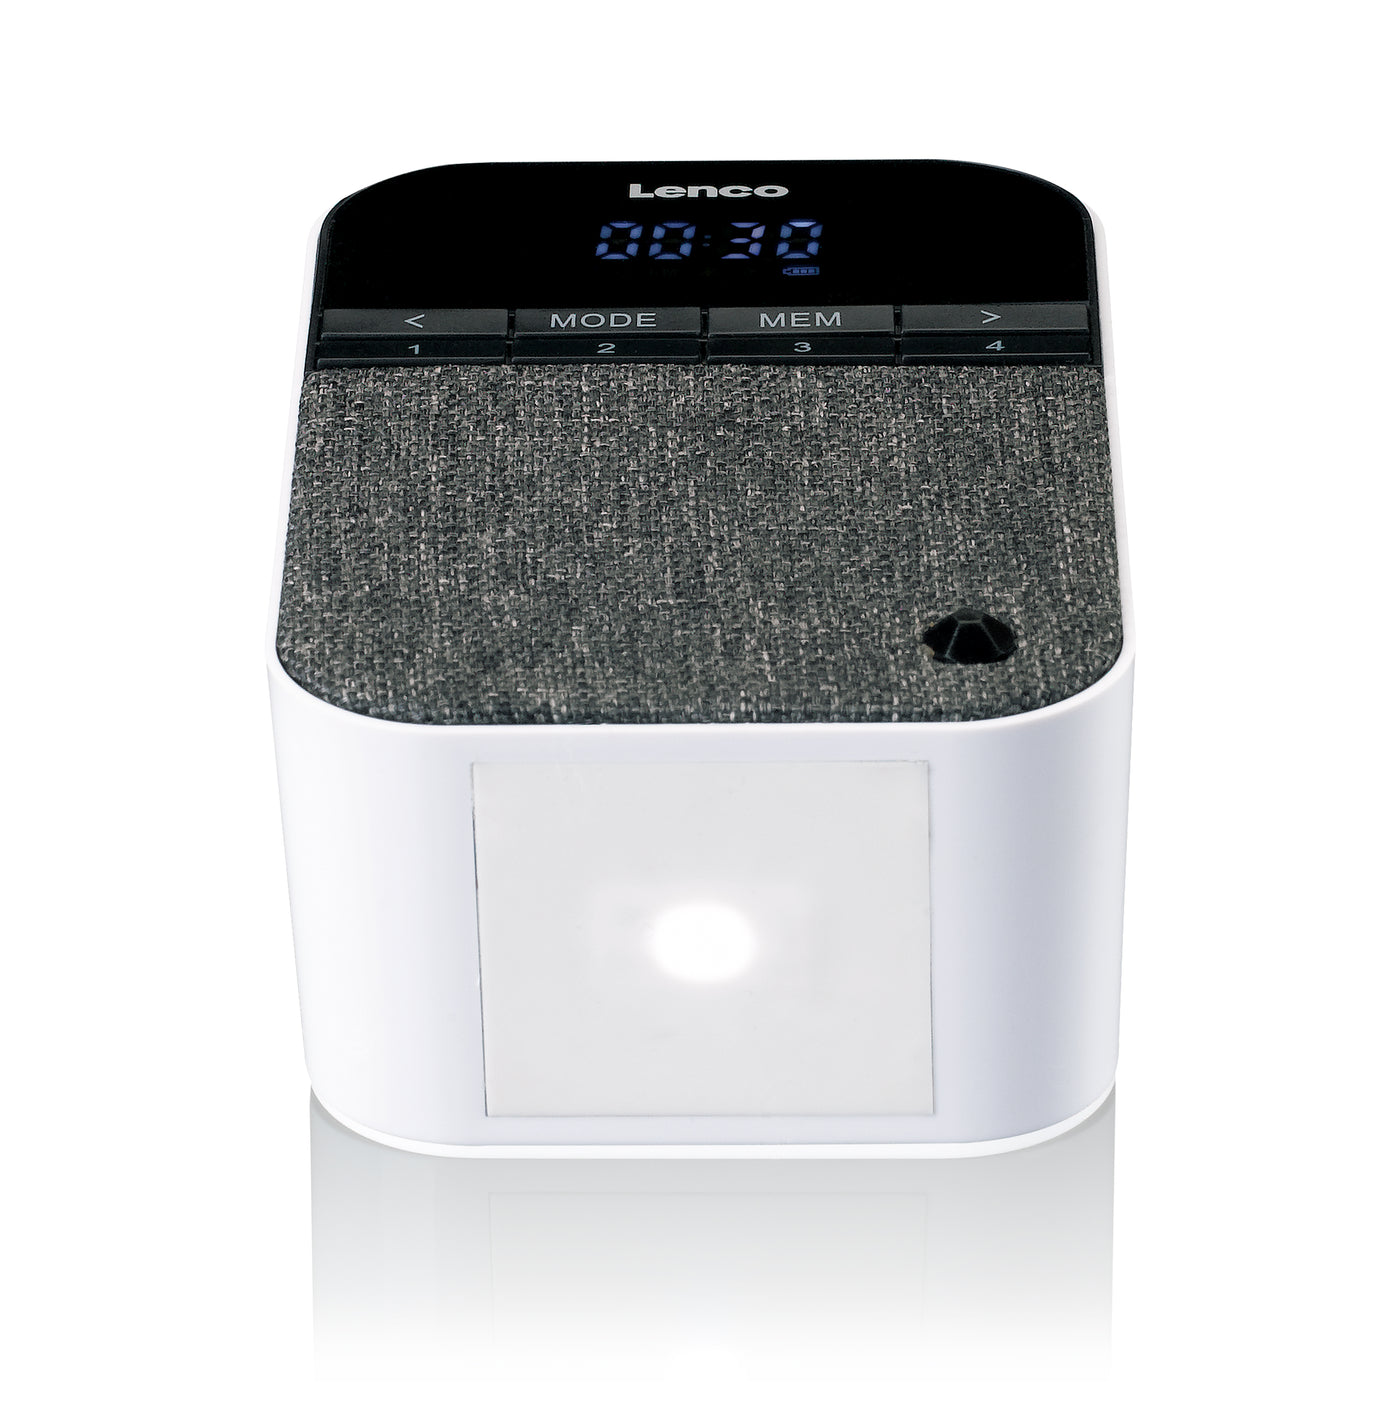 LENCO PPR-100WH - FM radio Bluetooth® speaker with removable plug - White